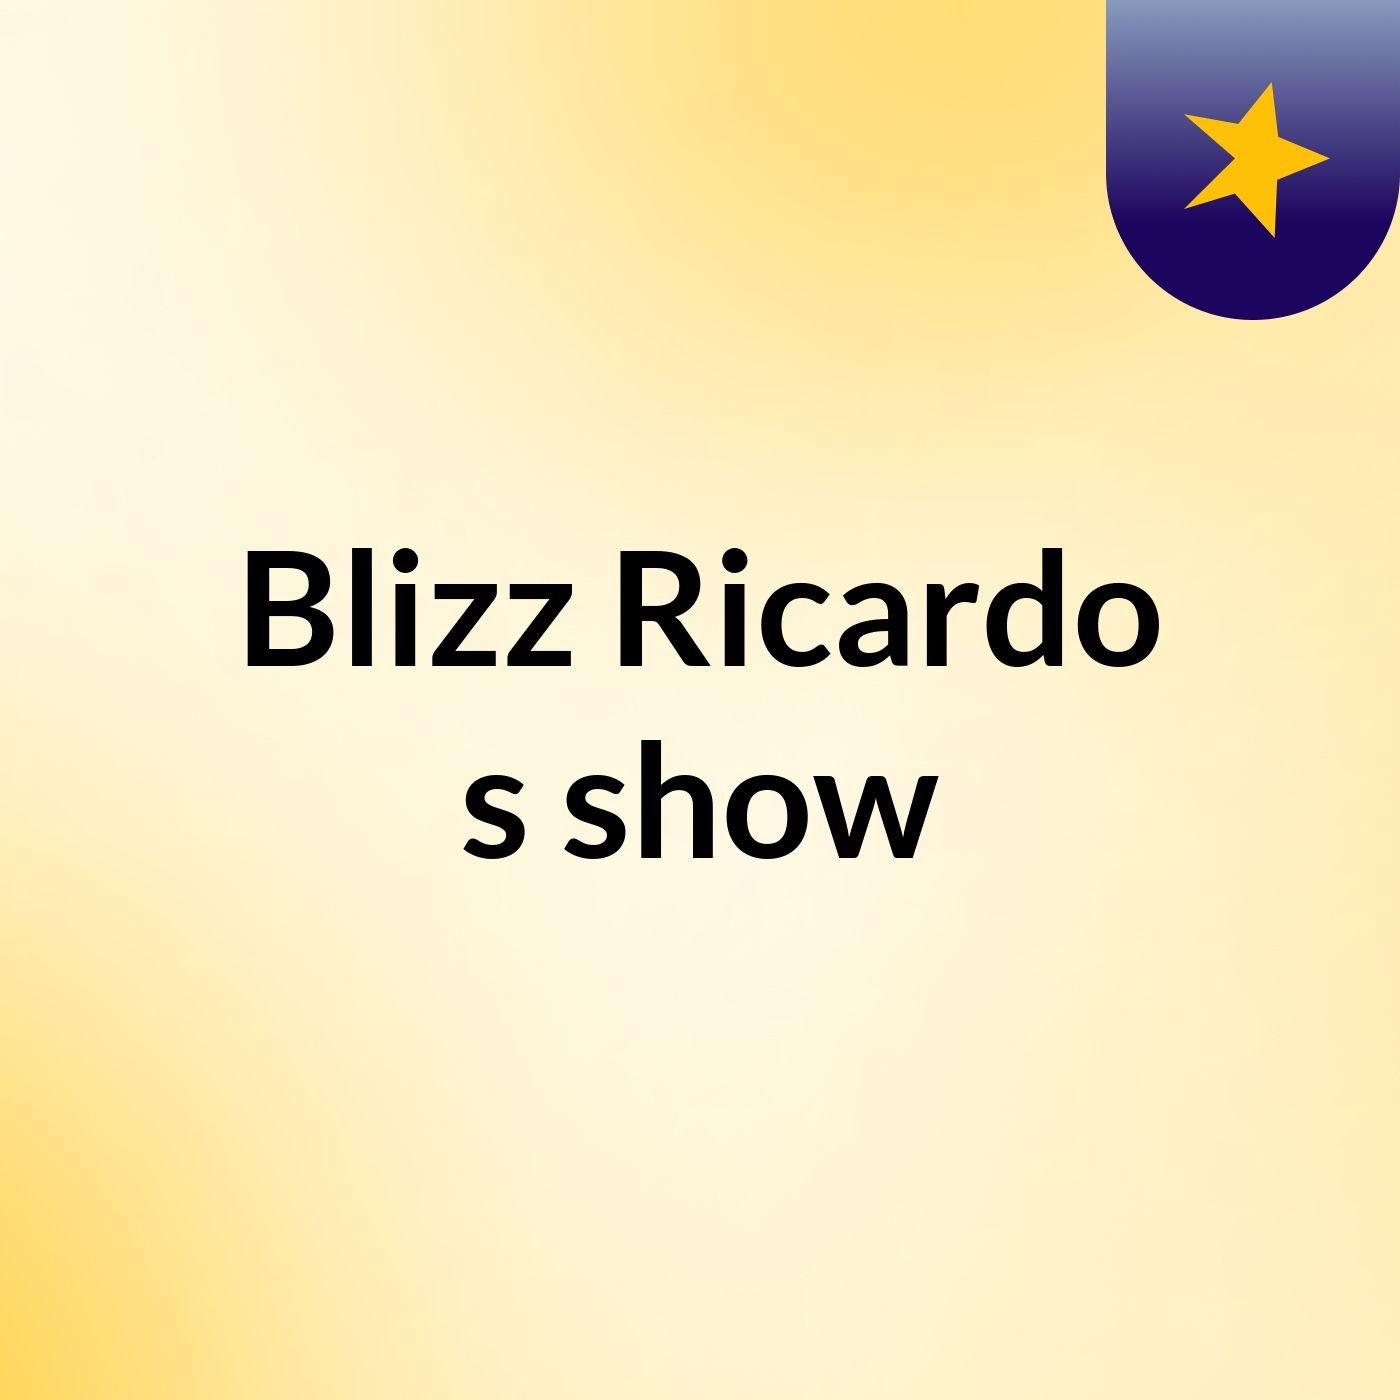 Blizz Ricardo's show